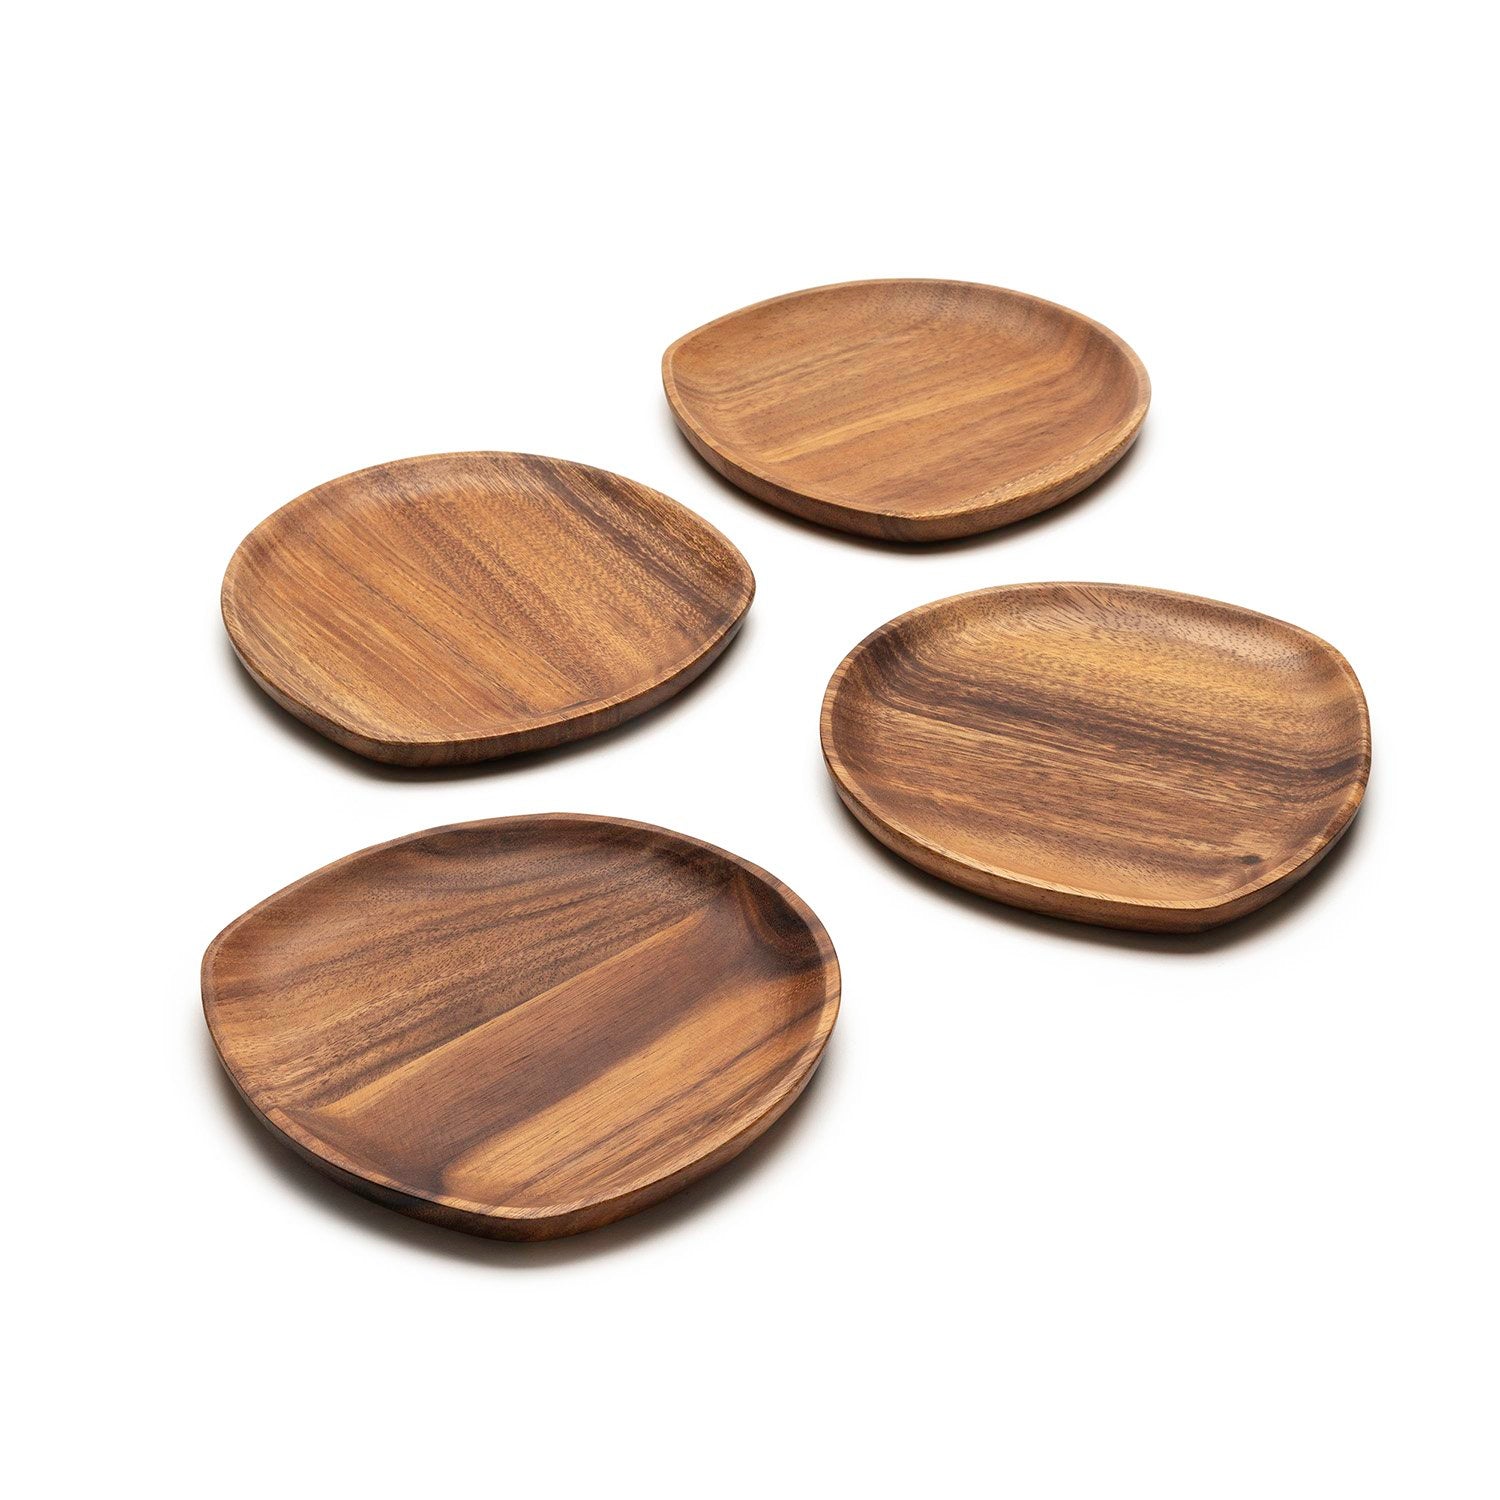 Four medium wooden plates